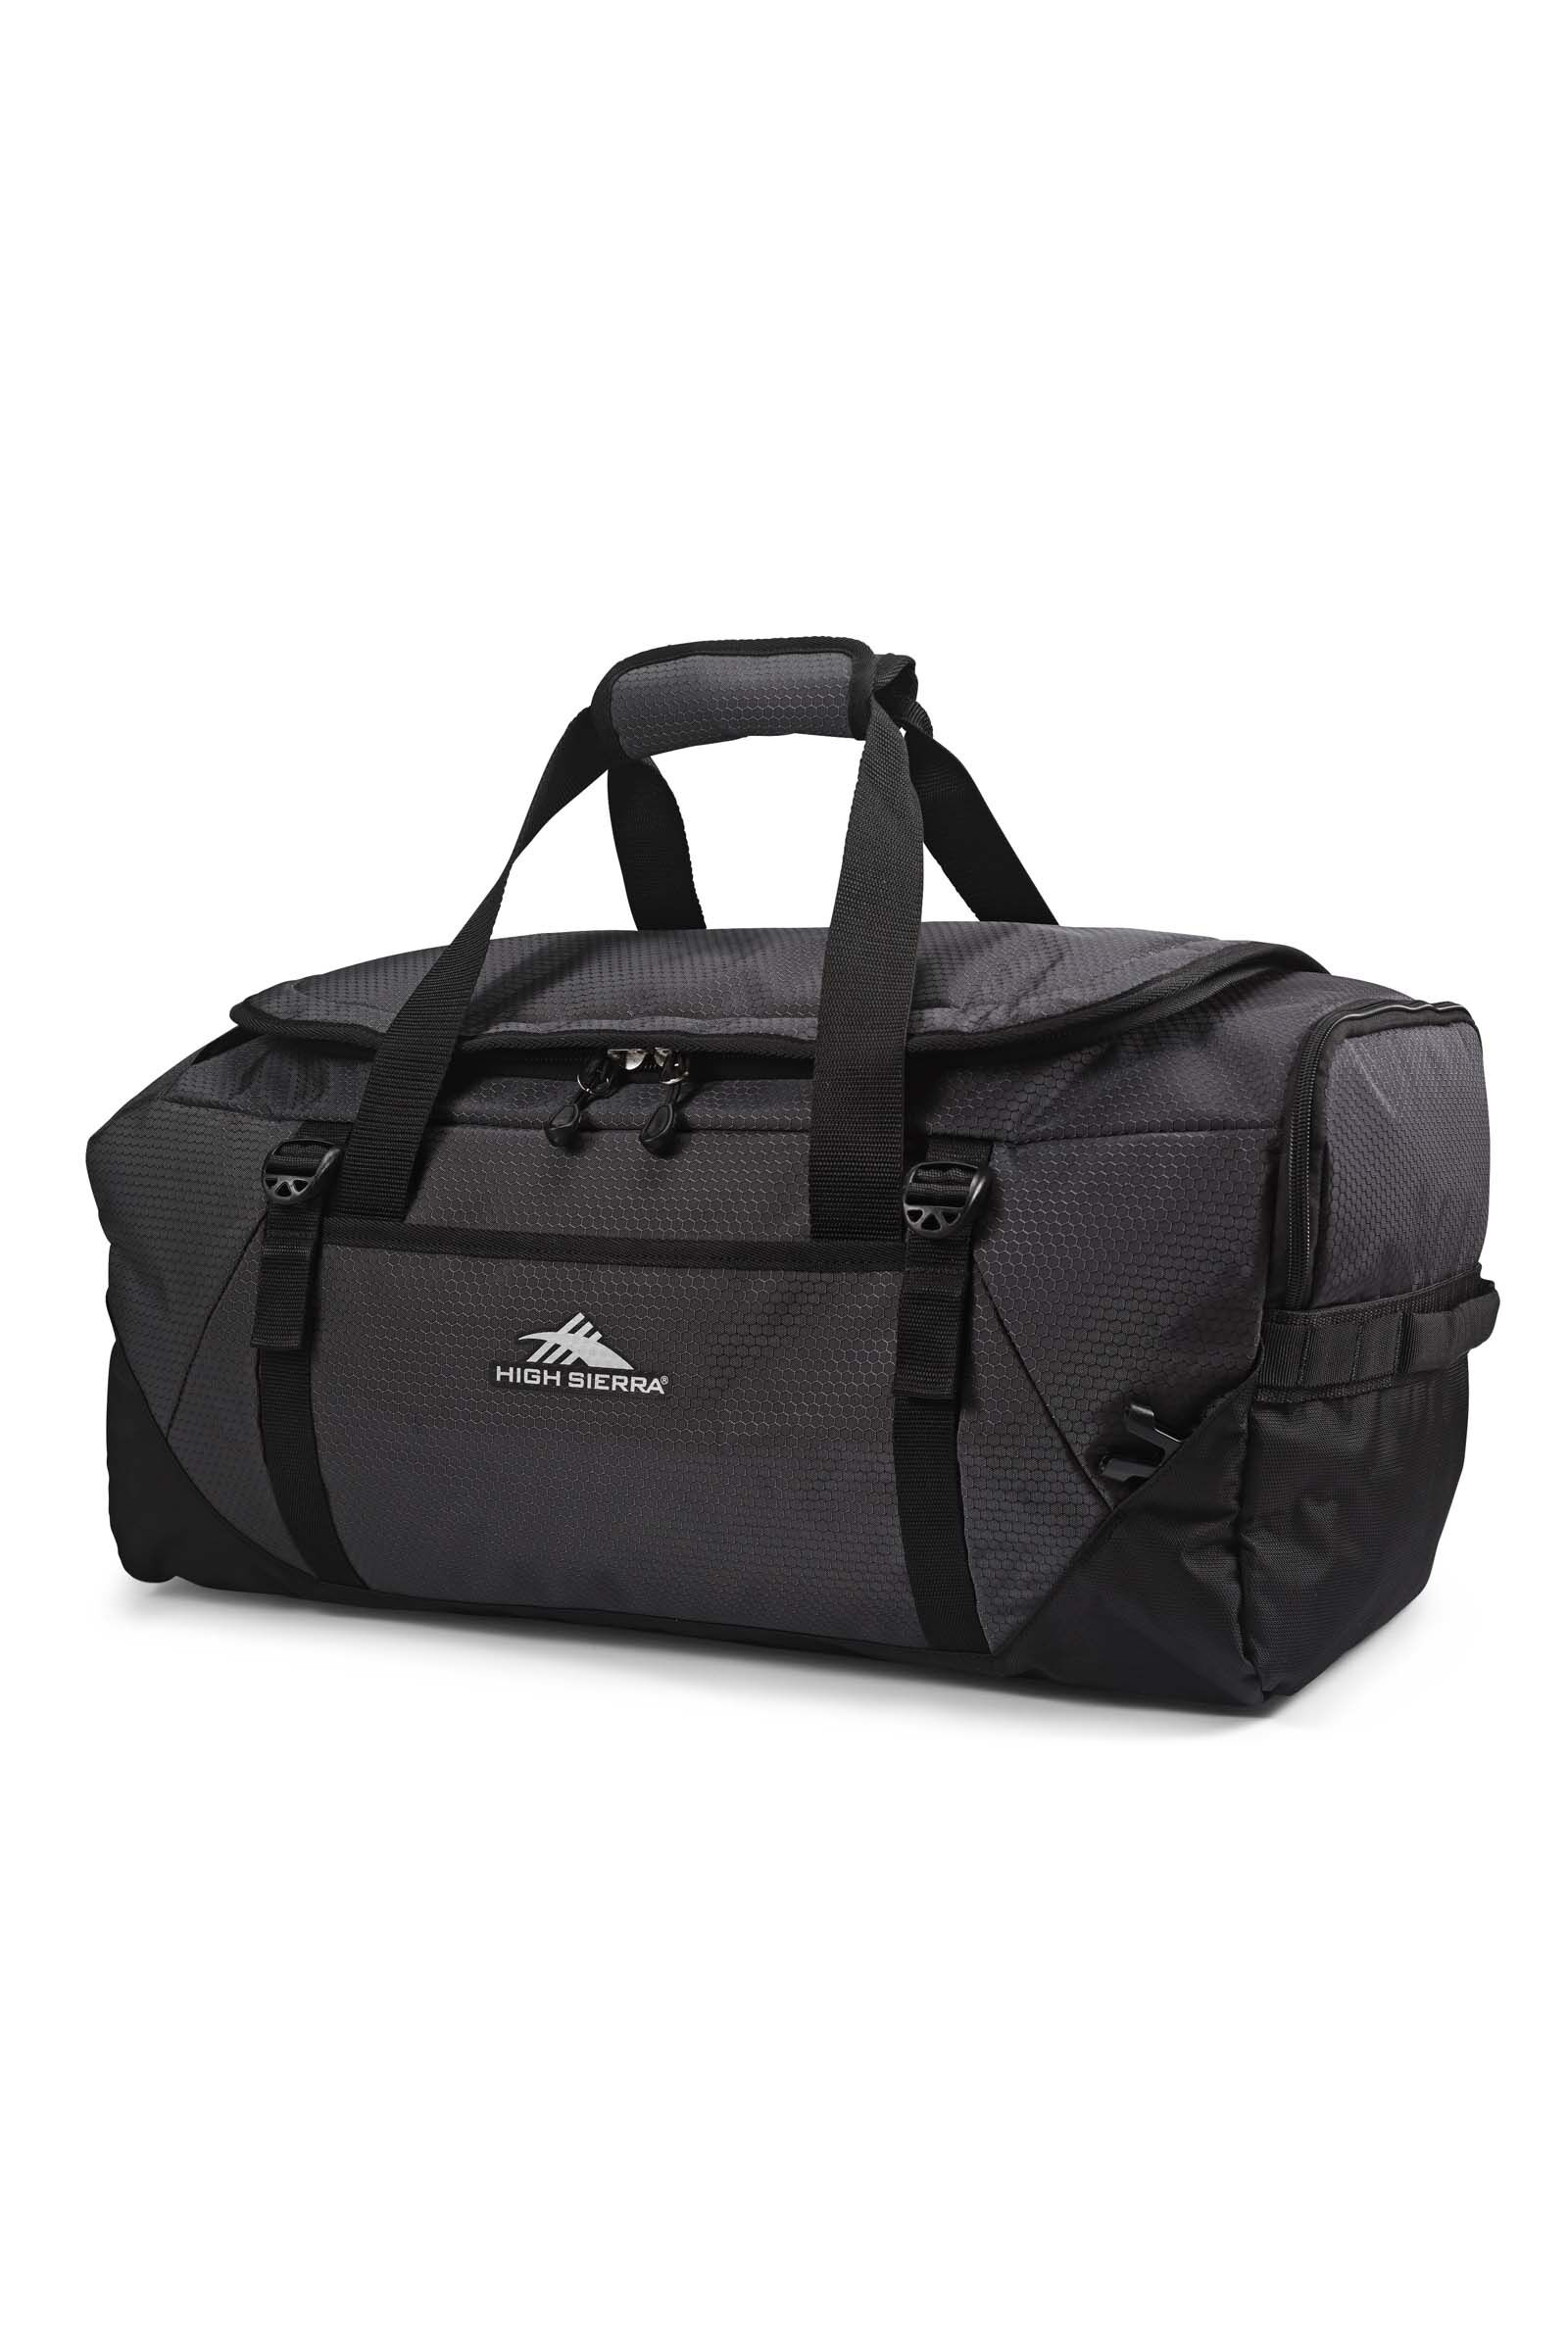 High Sierra Fairlead Collection Travel Duffel/Backpack